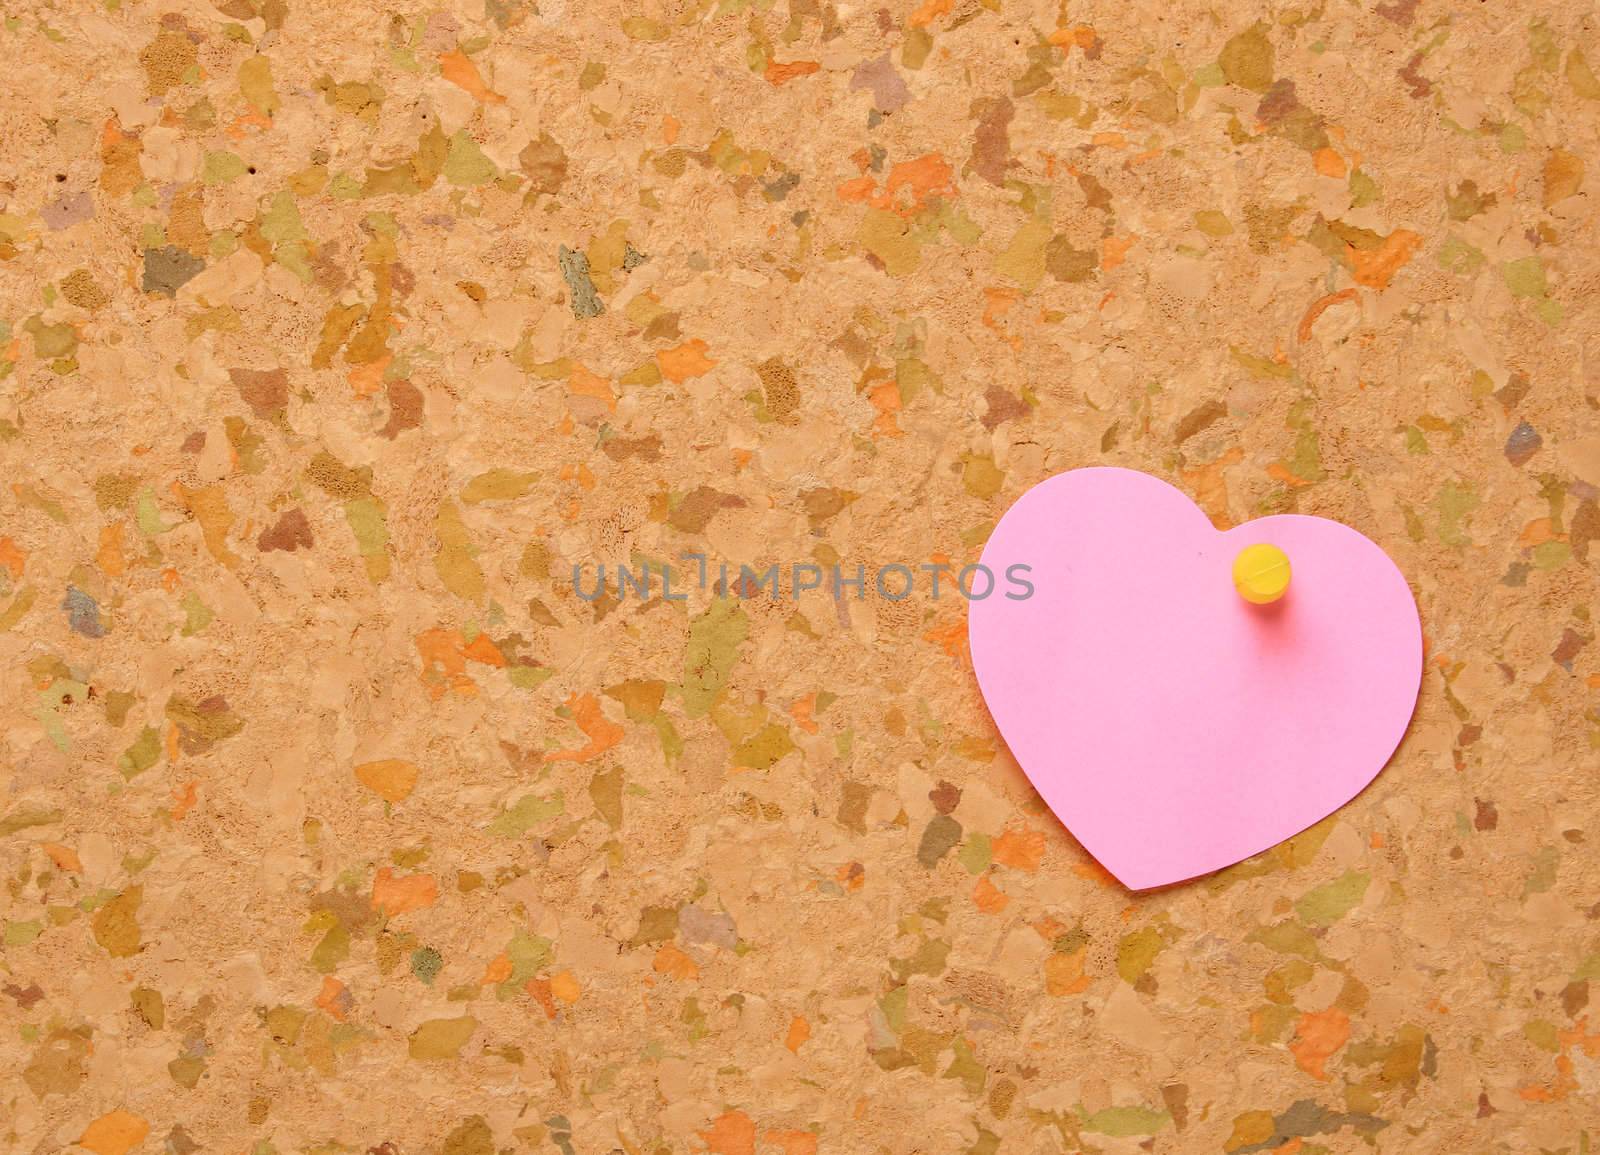 Cork board with heart shape sticky note